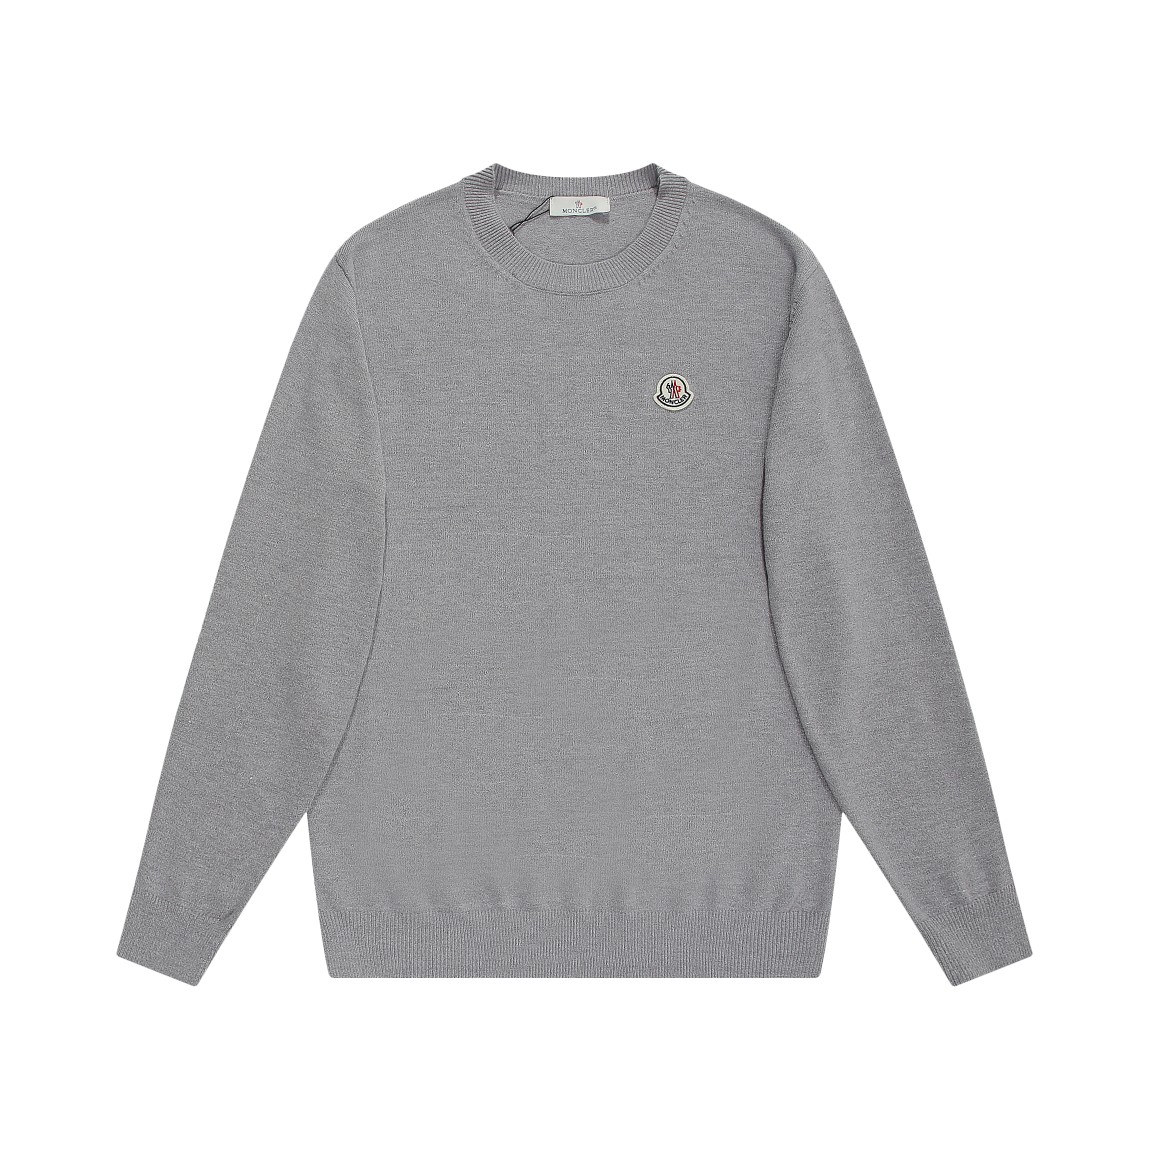 Moncler Clothing Sweatshirts Black Grey Men Knitting Wool Fall/Winter Collection Trendy Brand